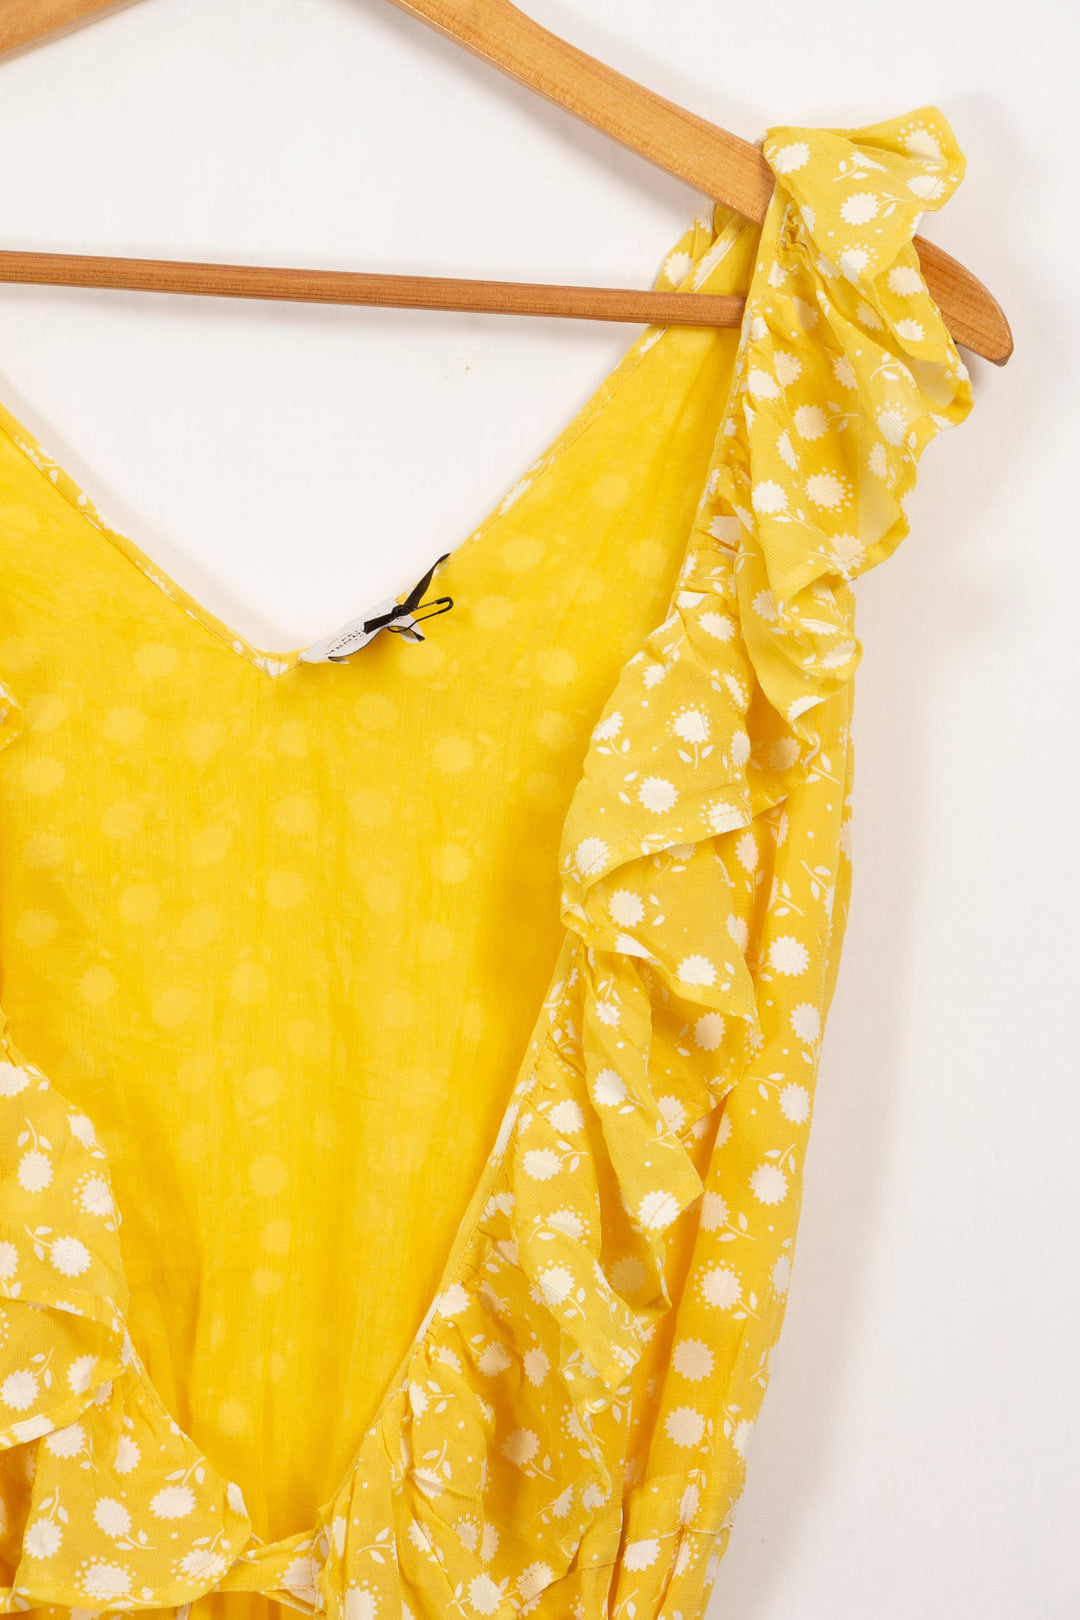 Petite Mendigote yellow patterned long dress - S